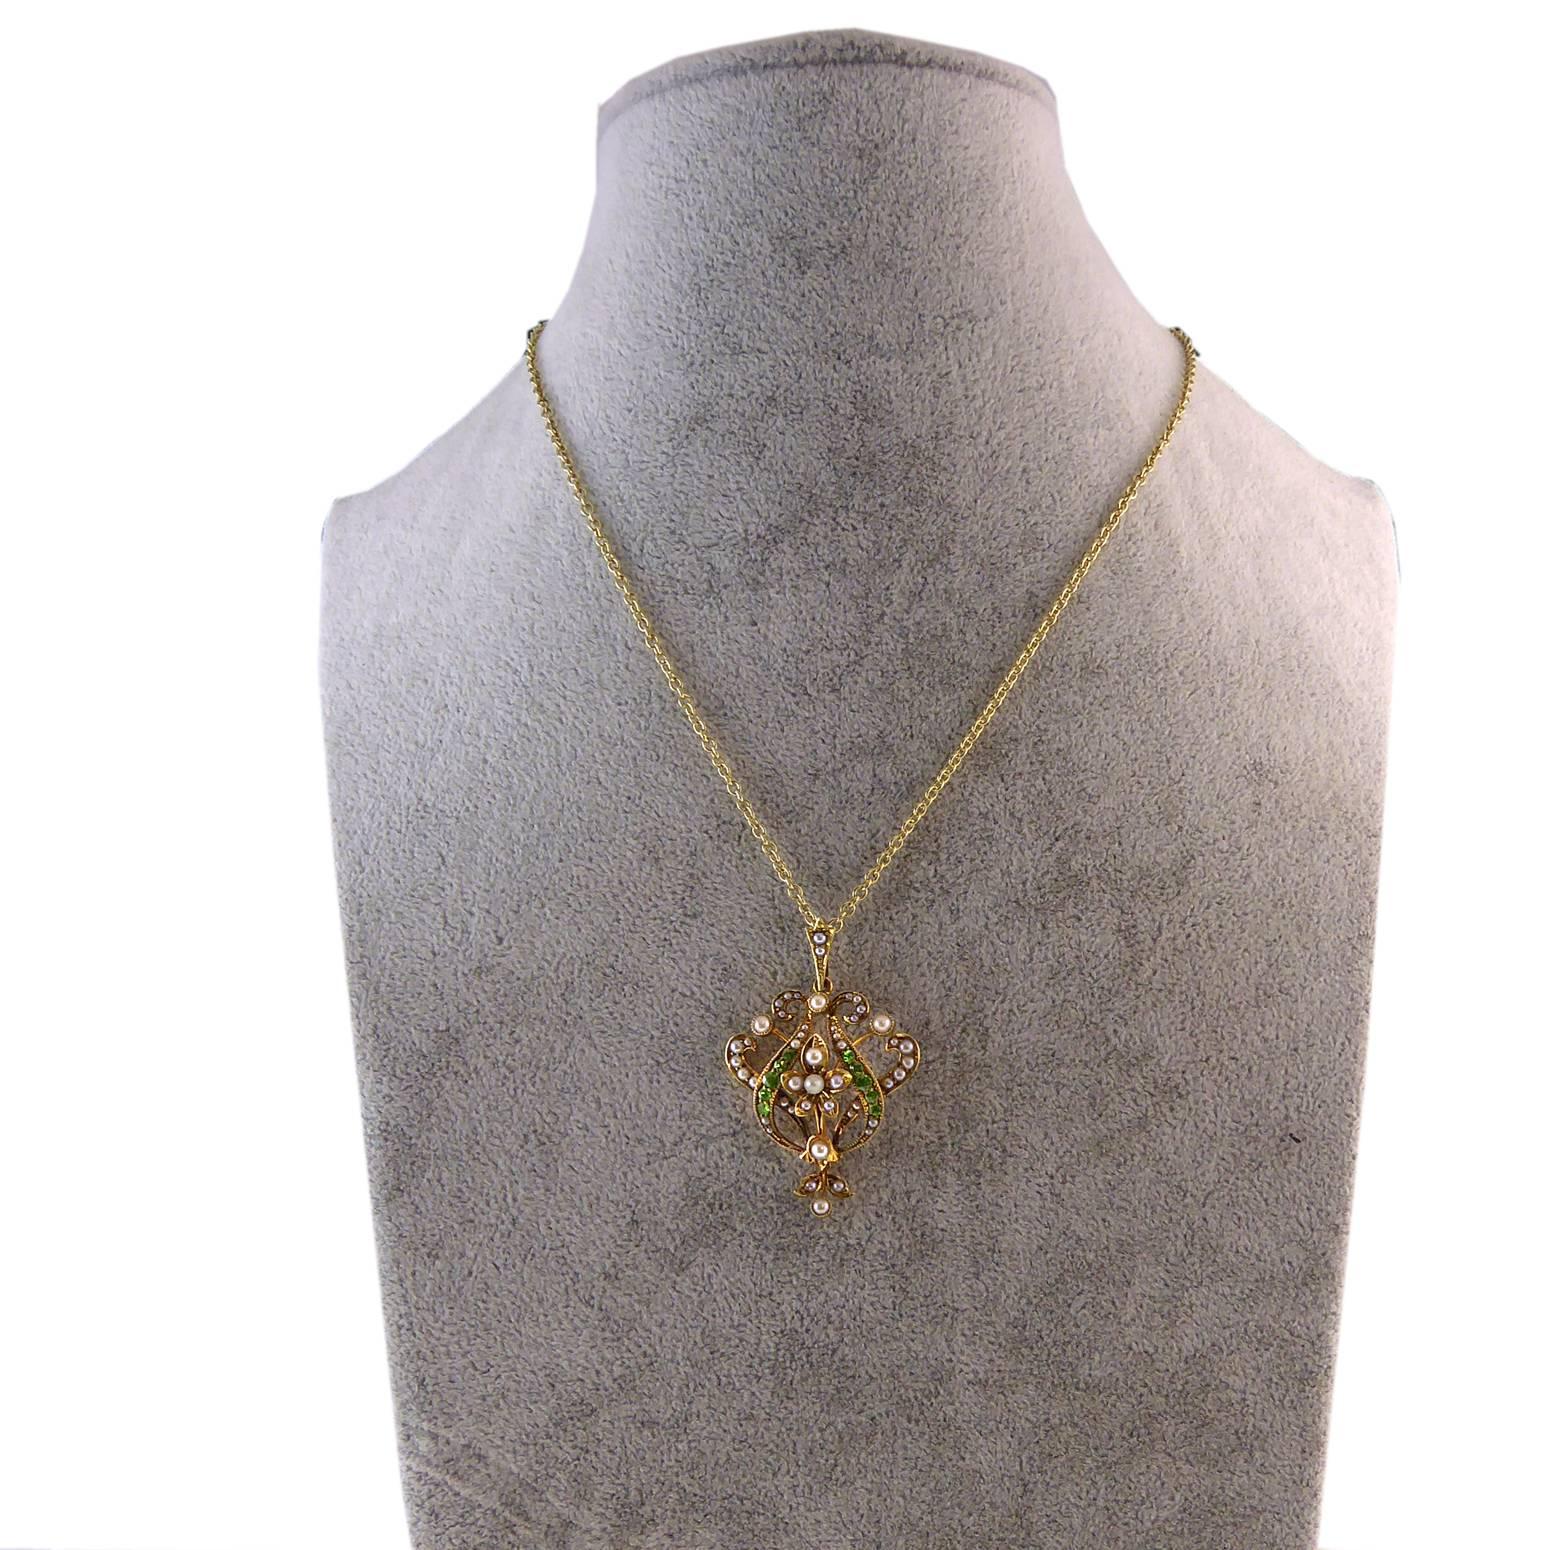 Antique Art Nouveau Pendant, 15 Carat Gold with Demantoid Garnet and Seed Pearls 1